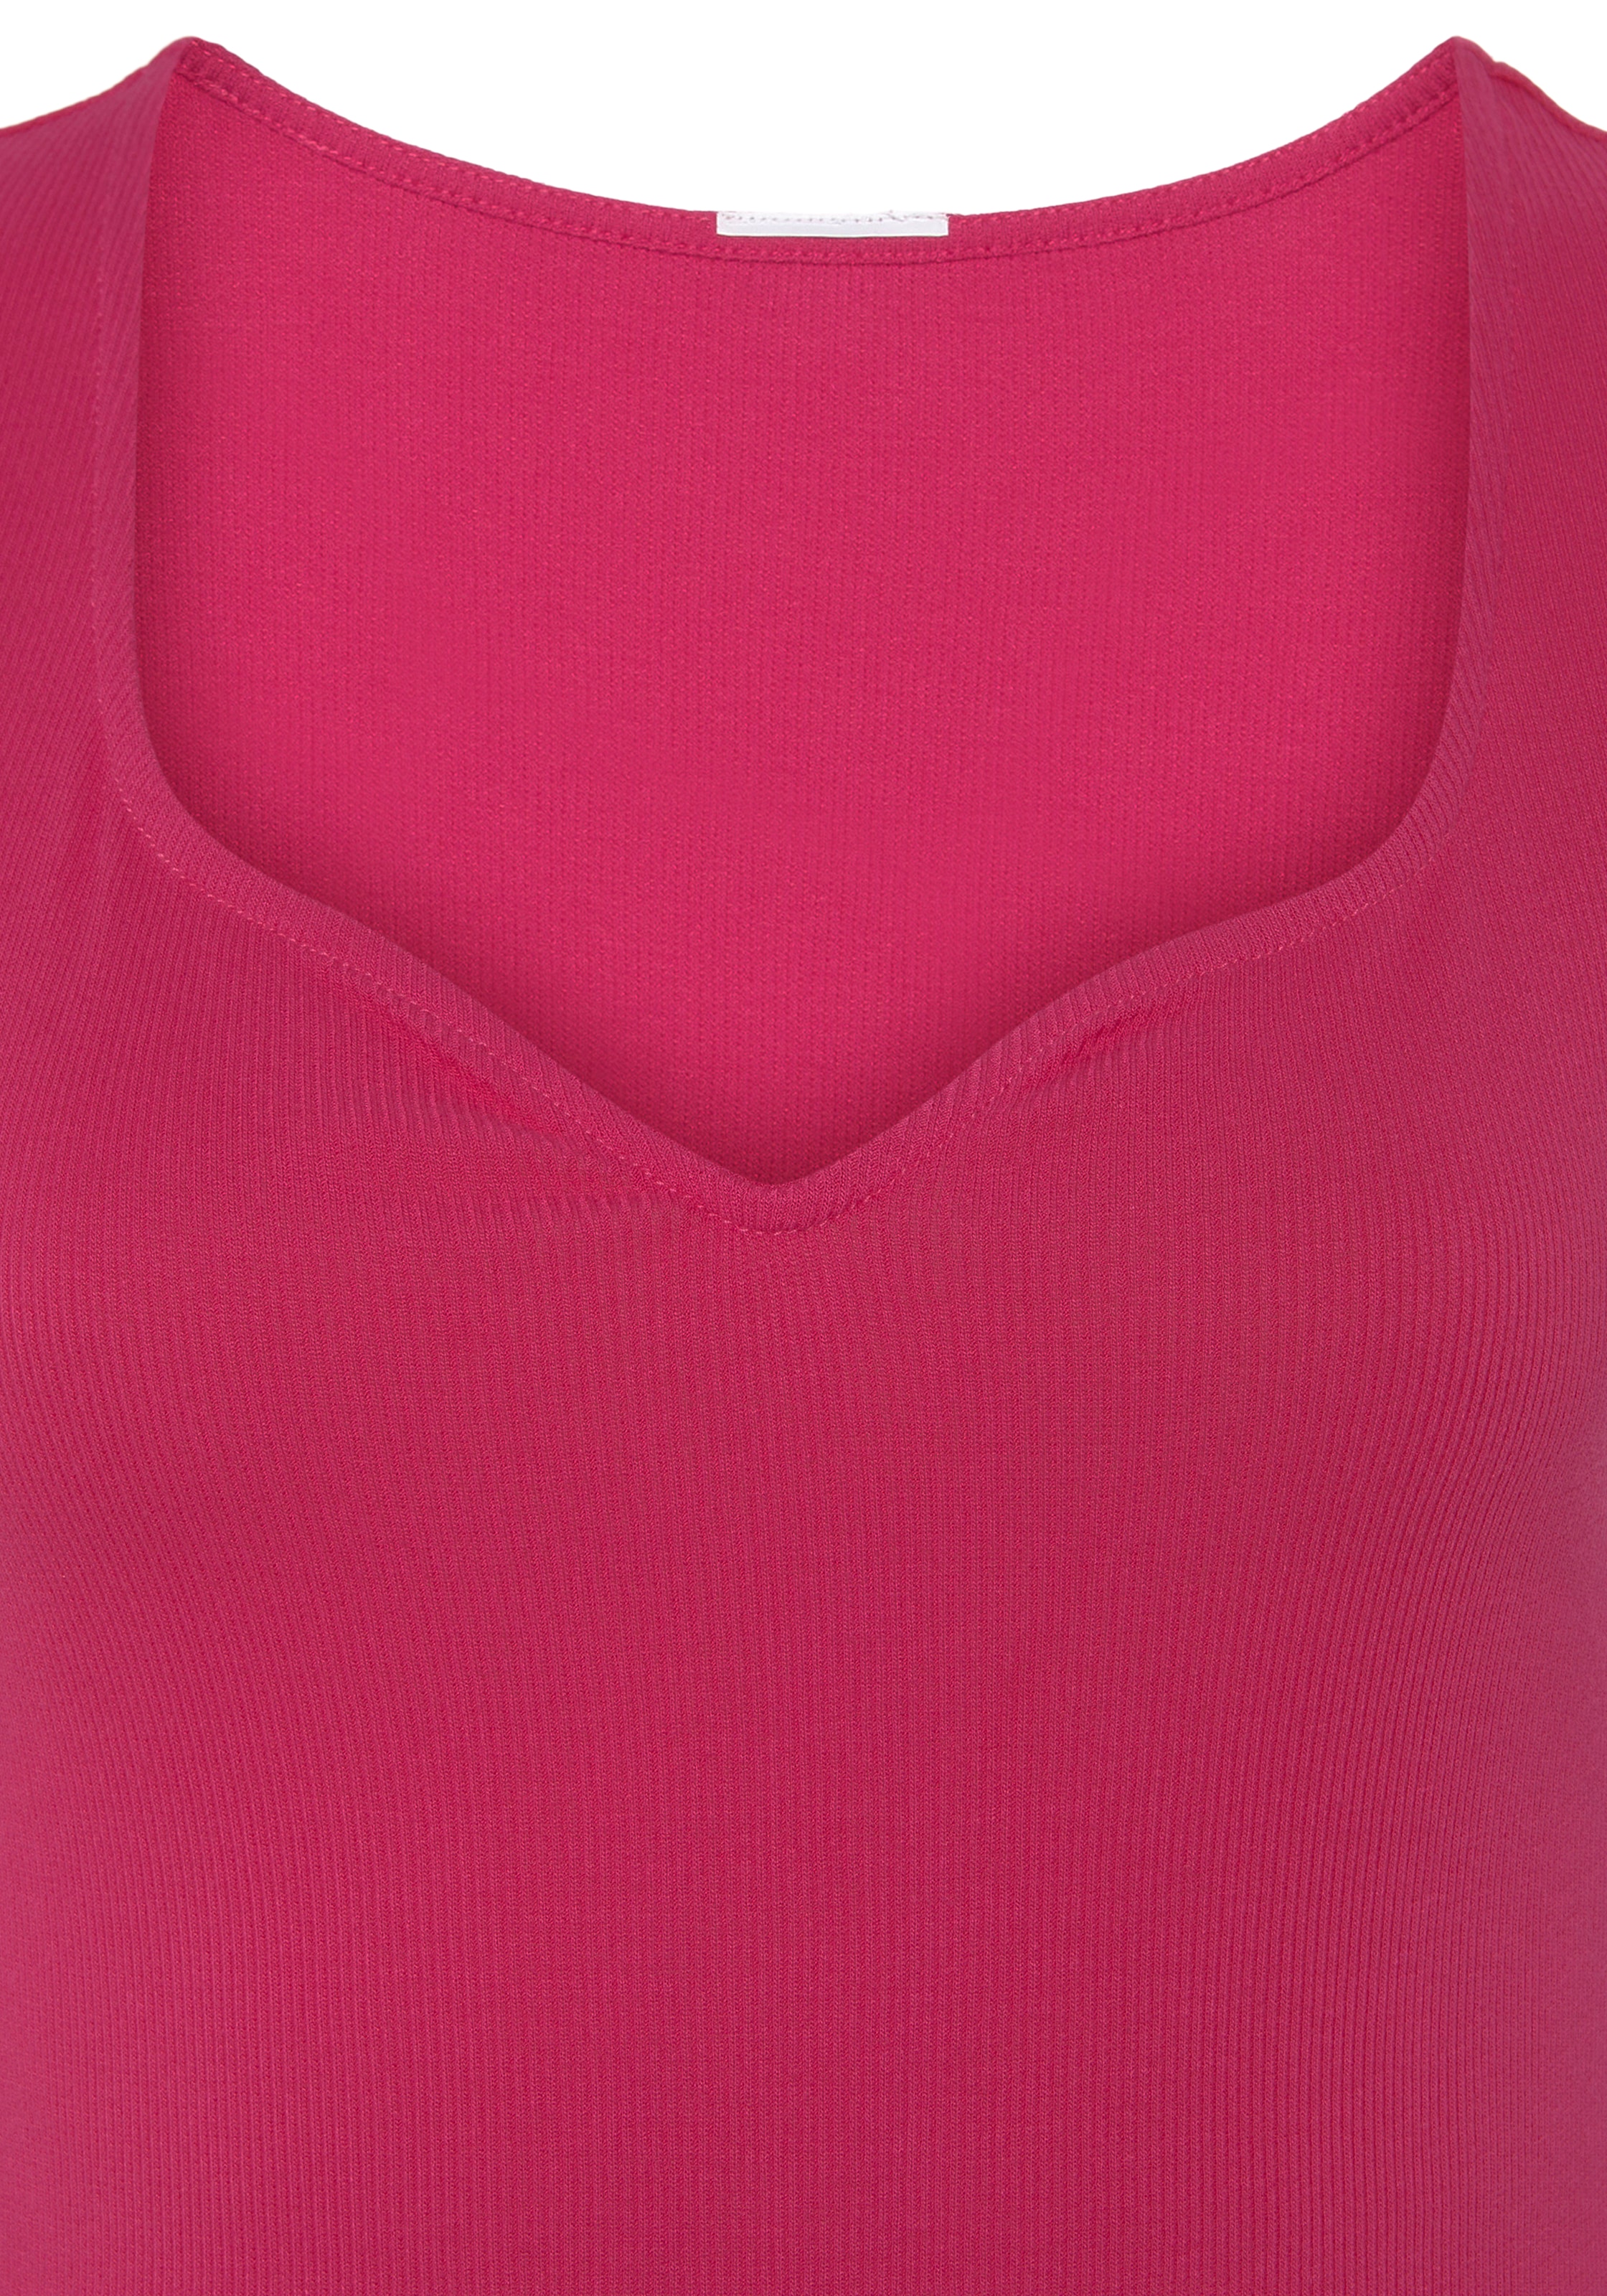 OTTOversand Vivance herzförmigen (2er-Pack), bei Dekolleté T-Shirt, mit